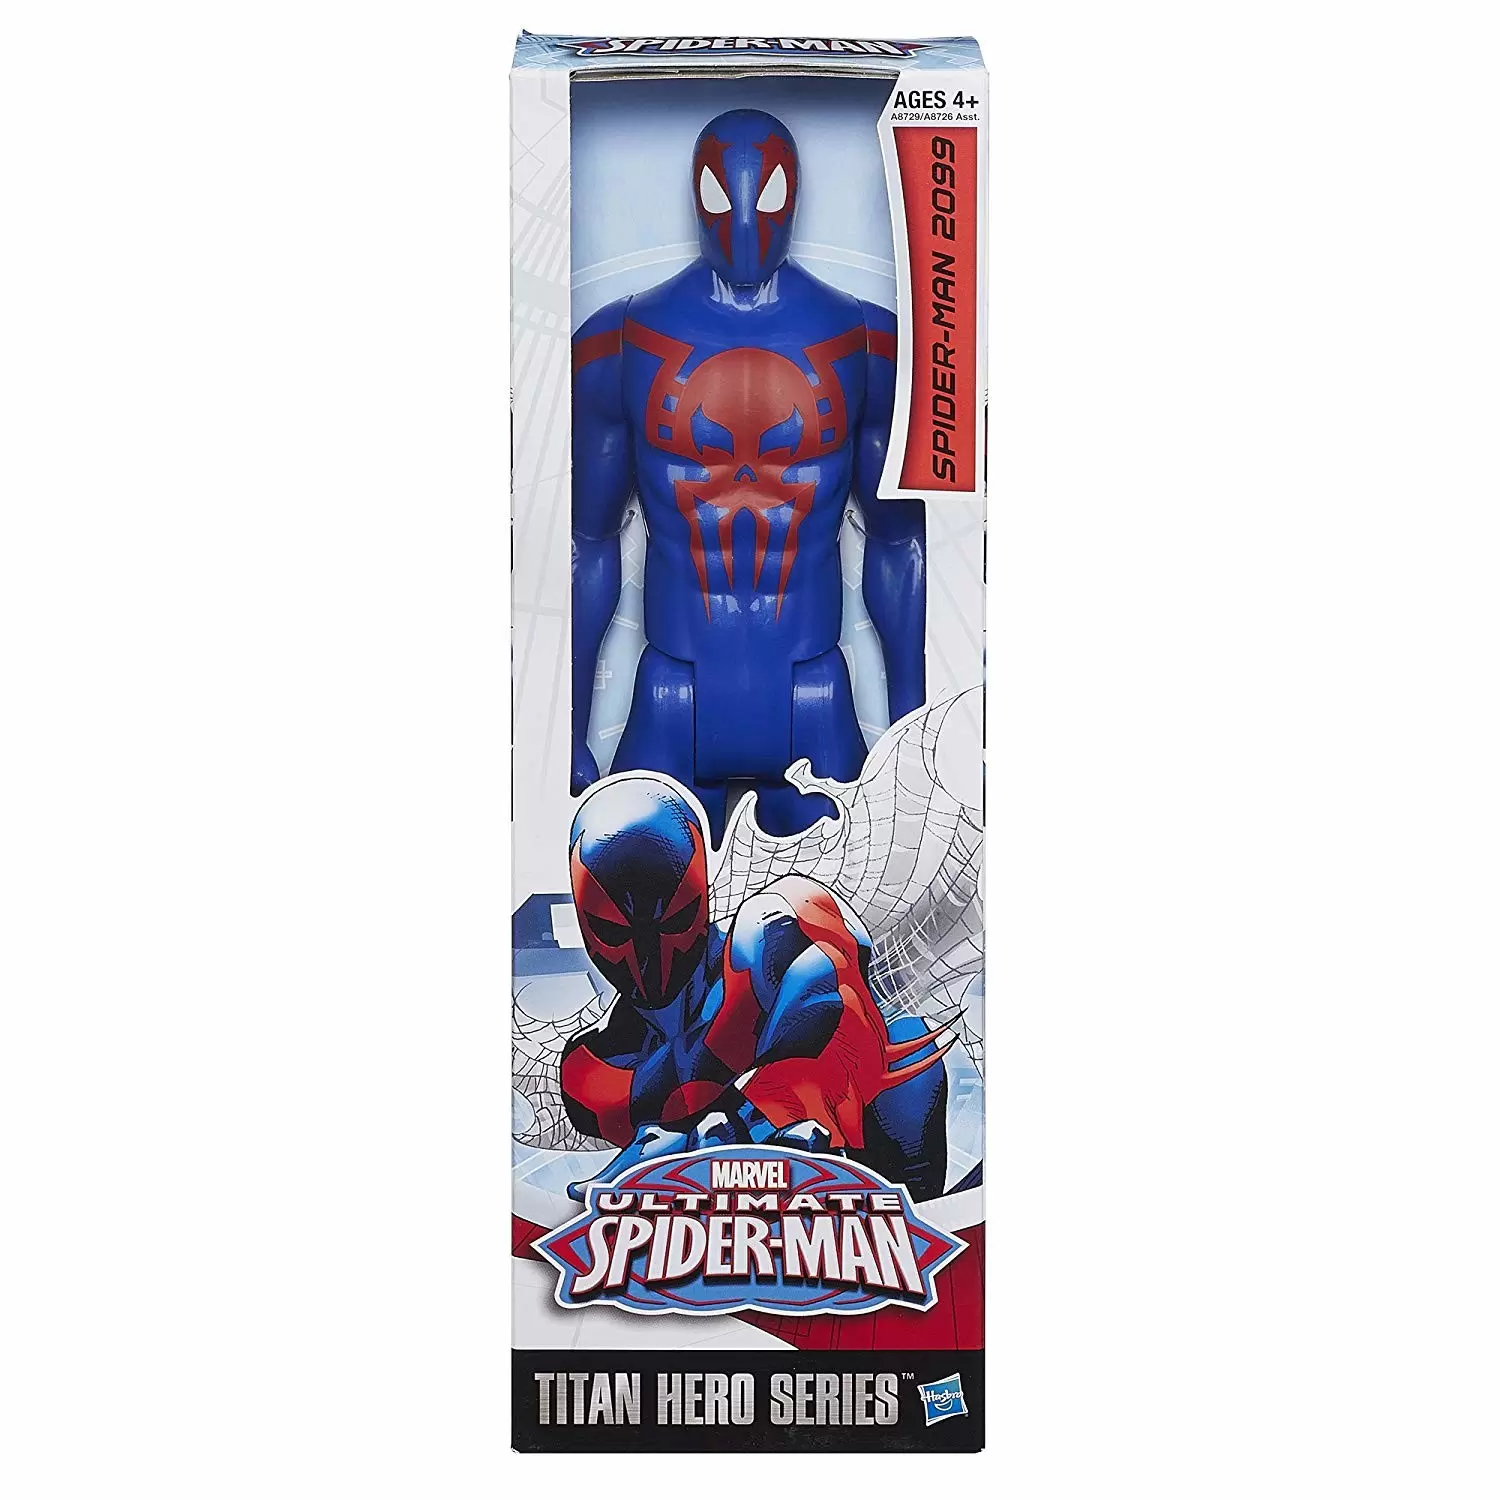 Spider-Man 2099 - Titan Hero Series action figure